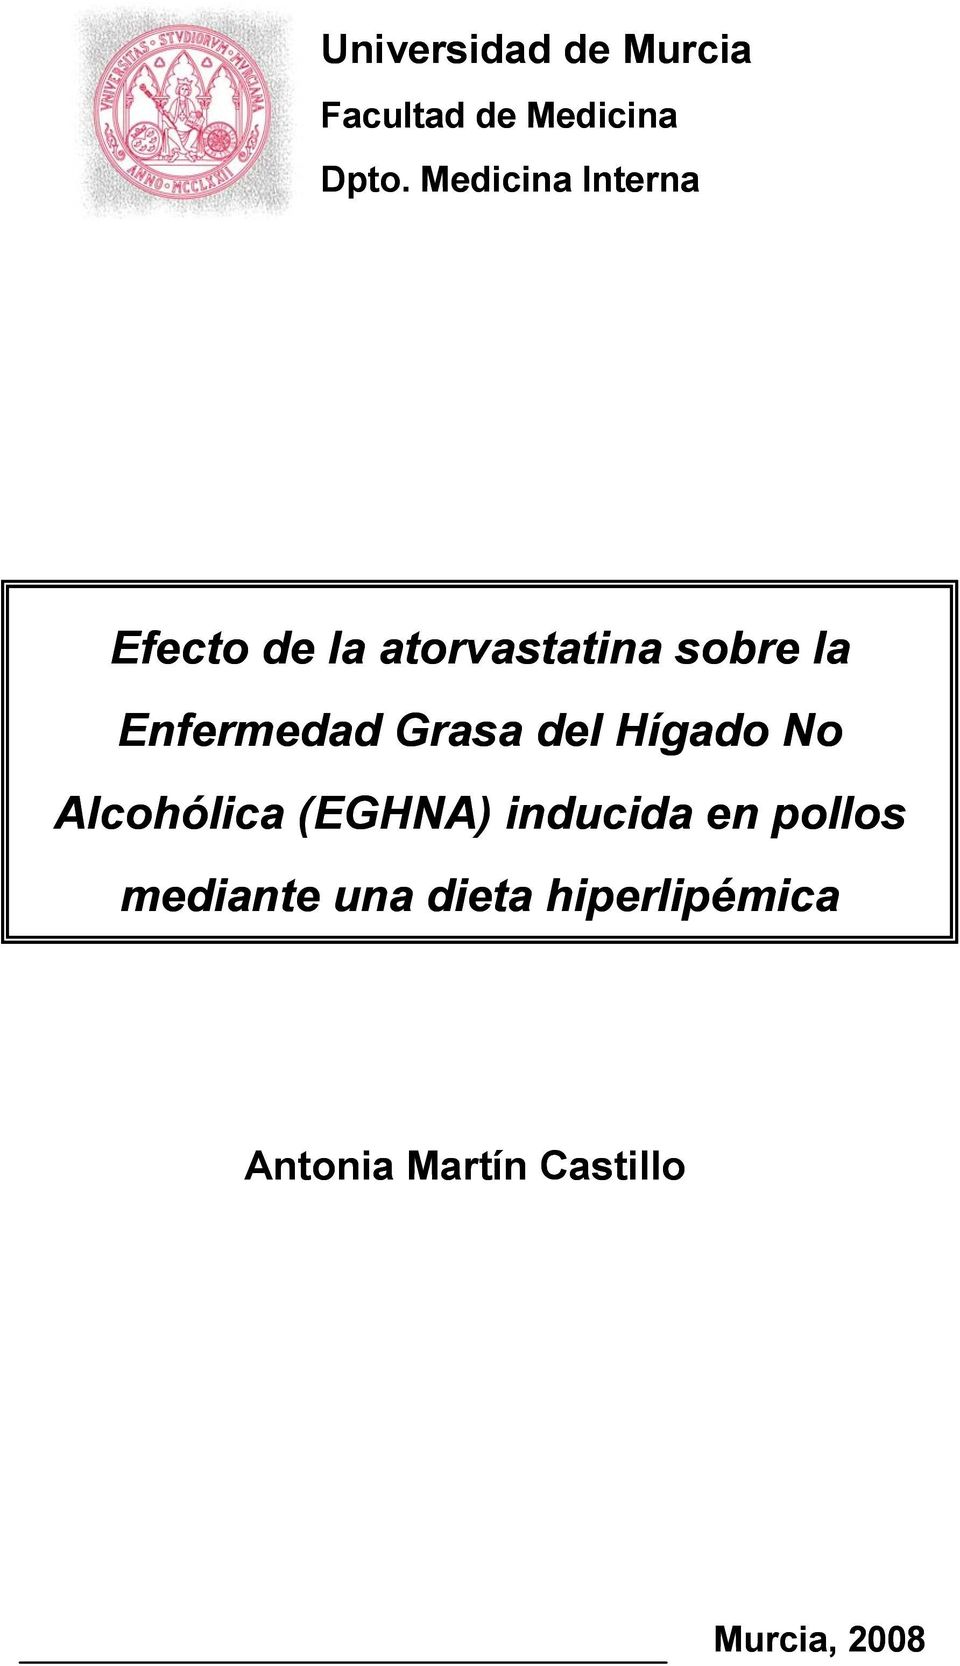 Enfermedad Grasa del Hígado No Alcohólica (EGHNA) inducida